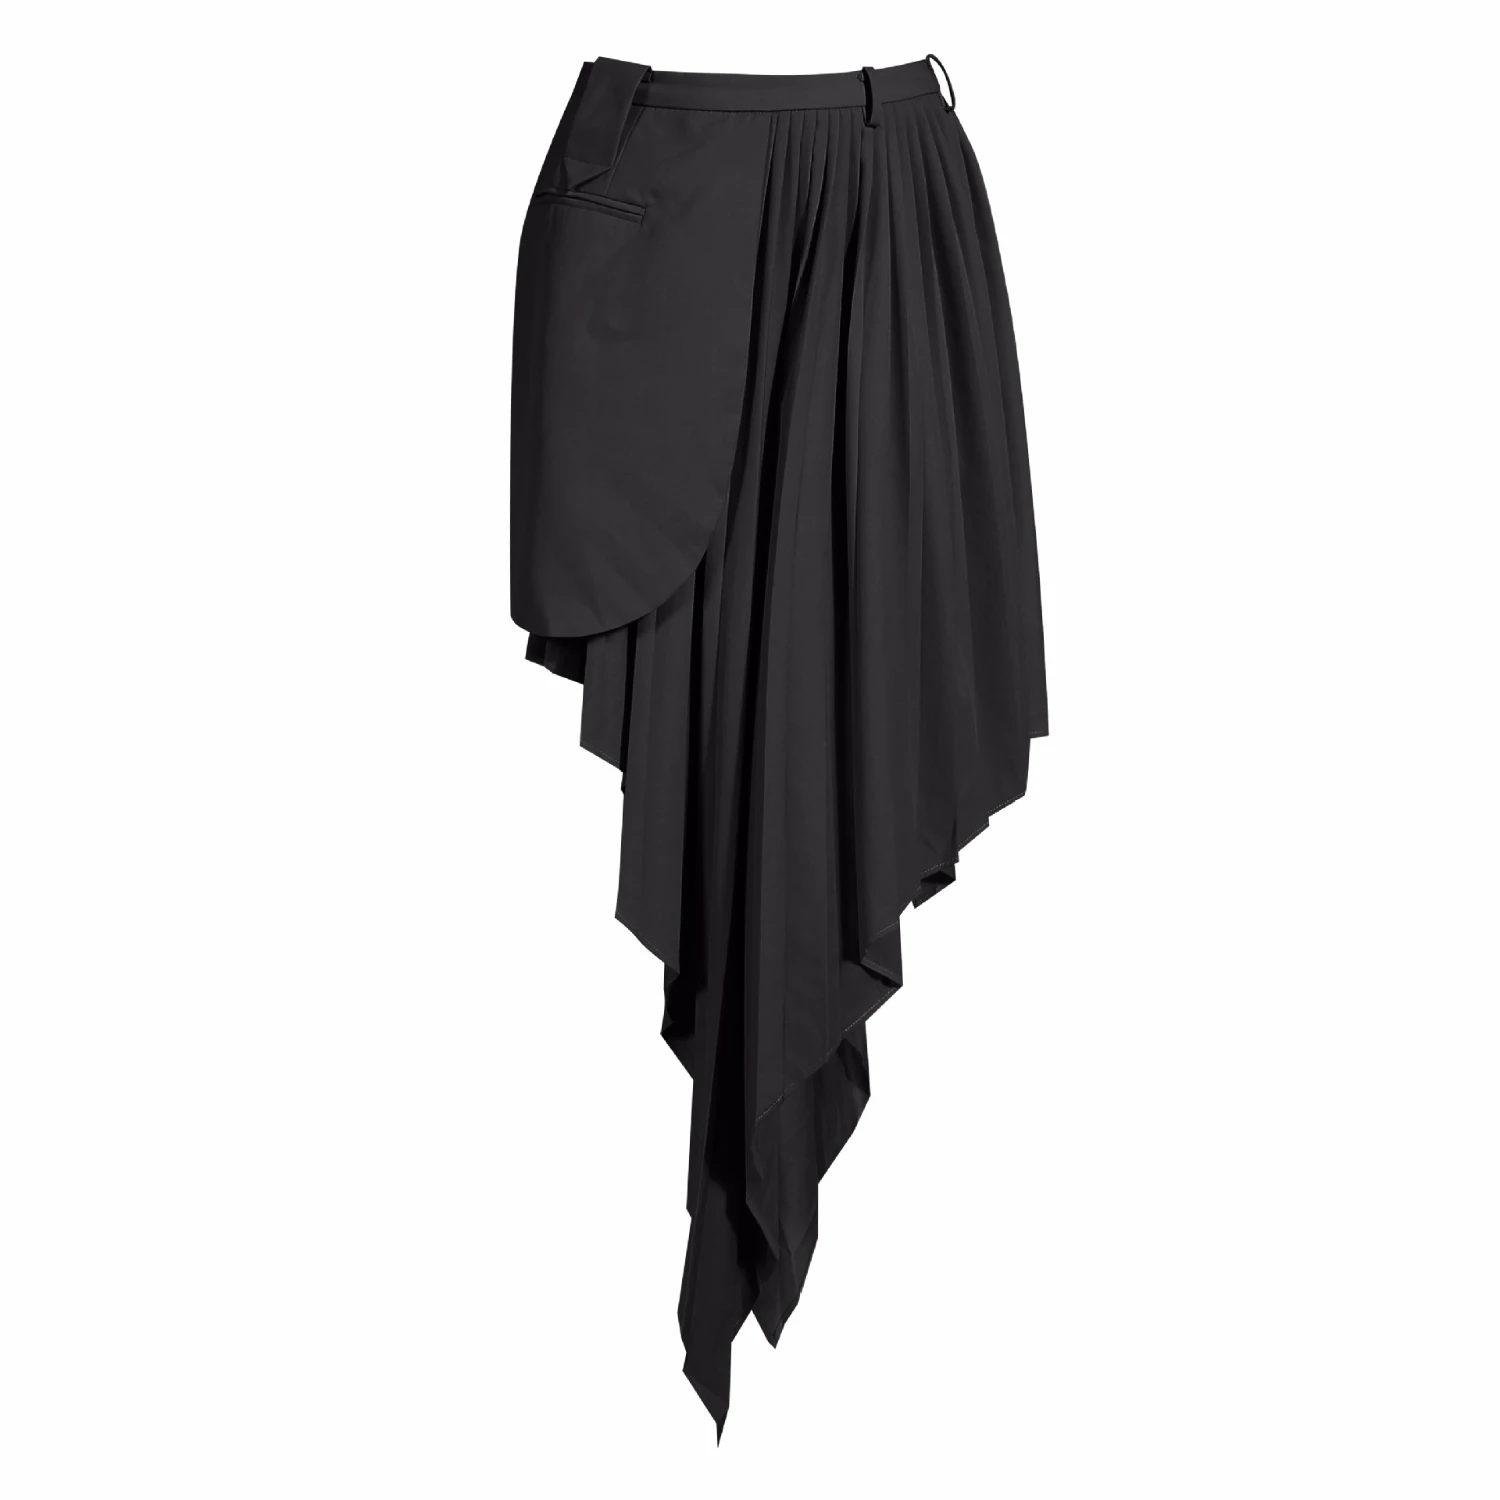 

GALCAUR Asymmetric Hem Skirt For Women High Waist Lace Up Pleated Patchwork Plus Size Skirts Female 2020 Fashion Clothing New